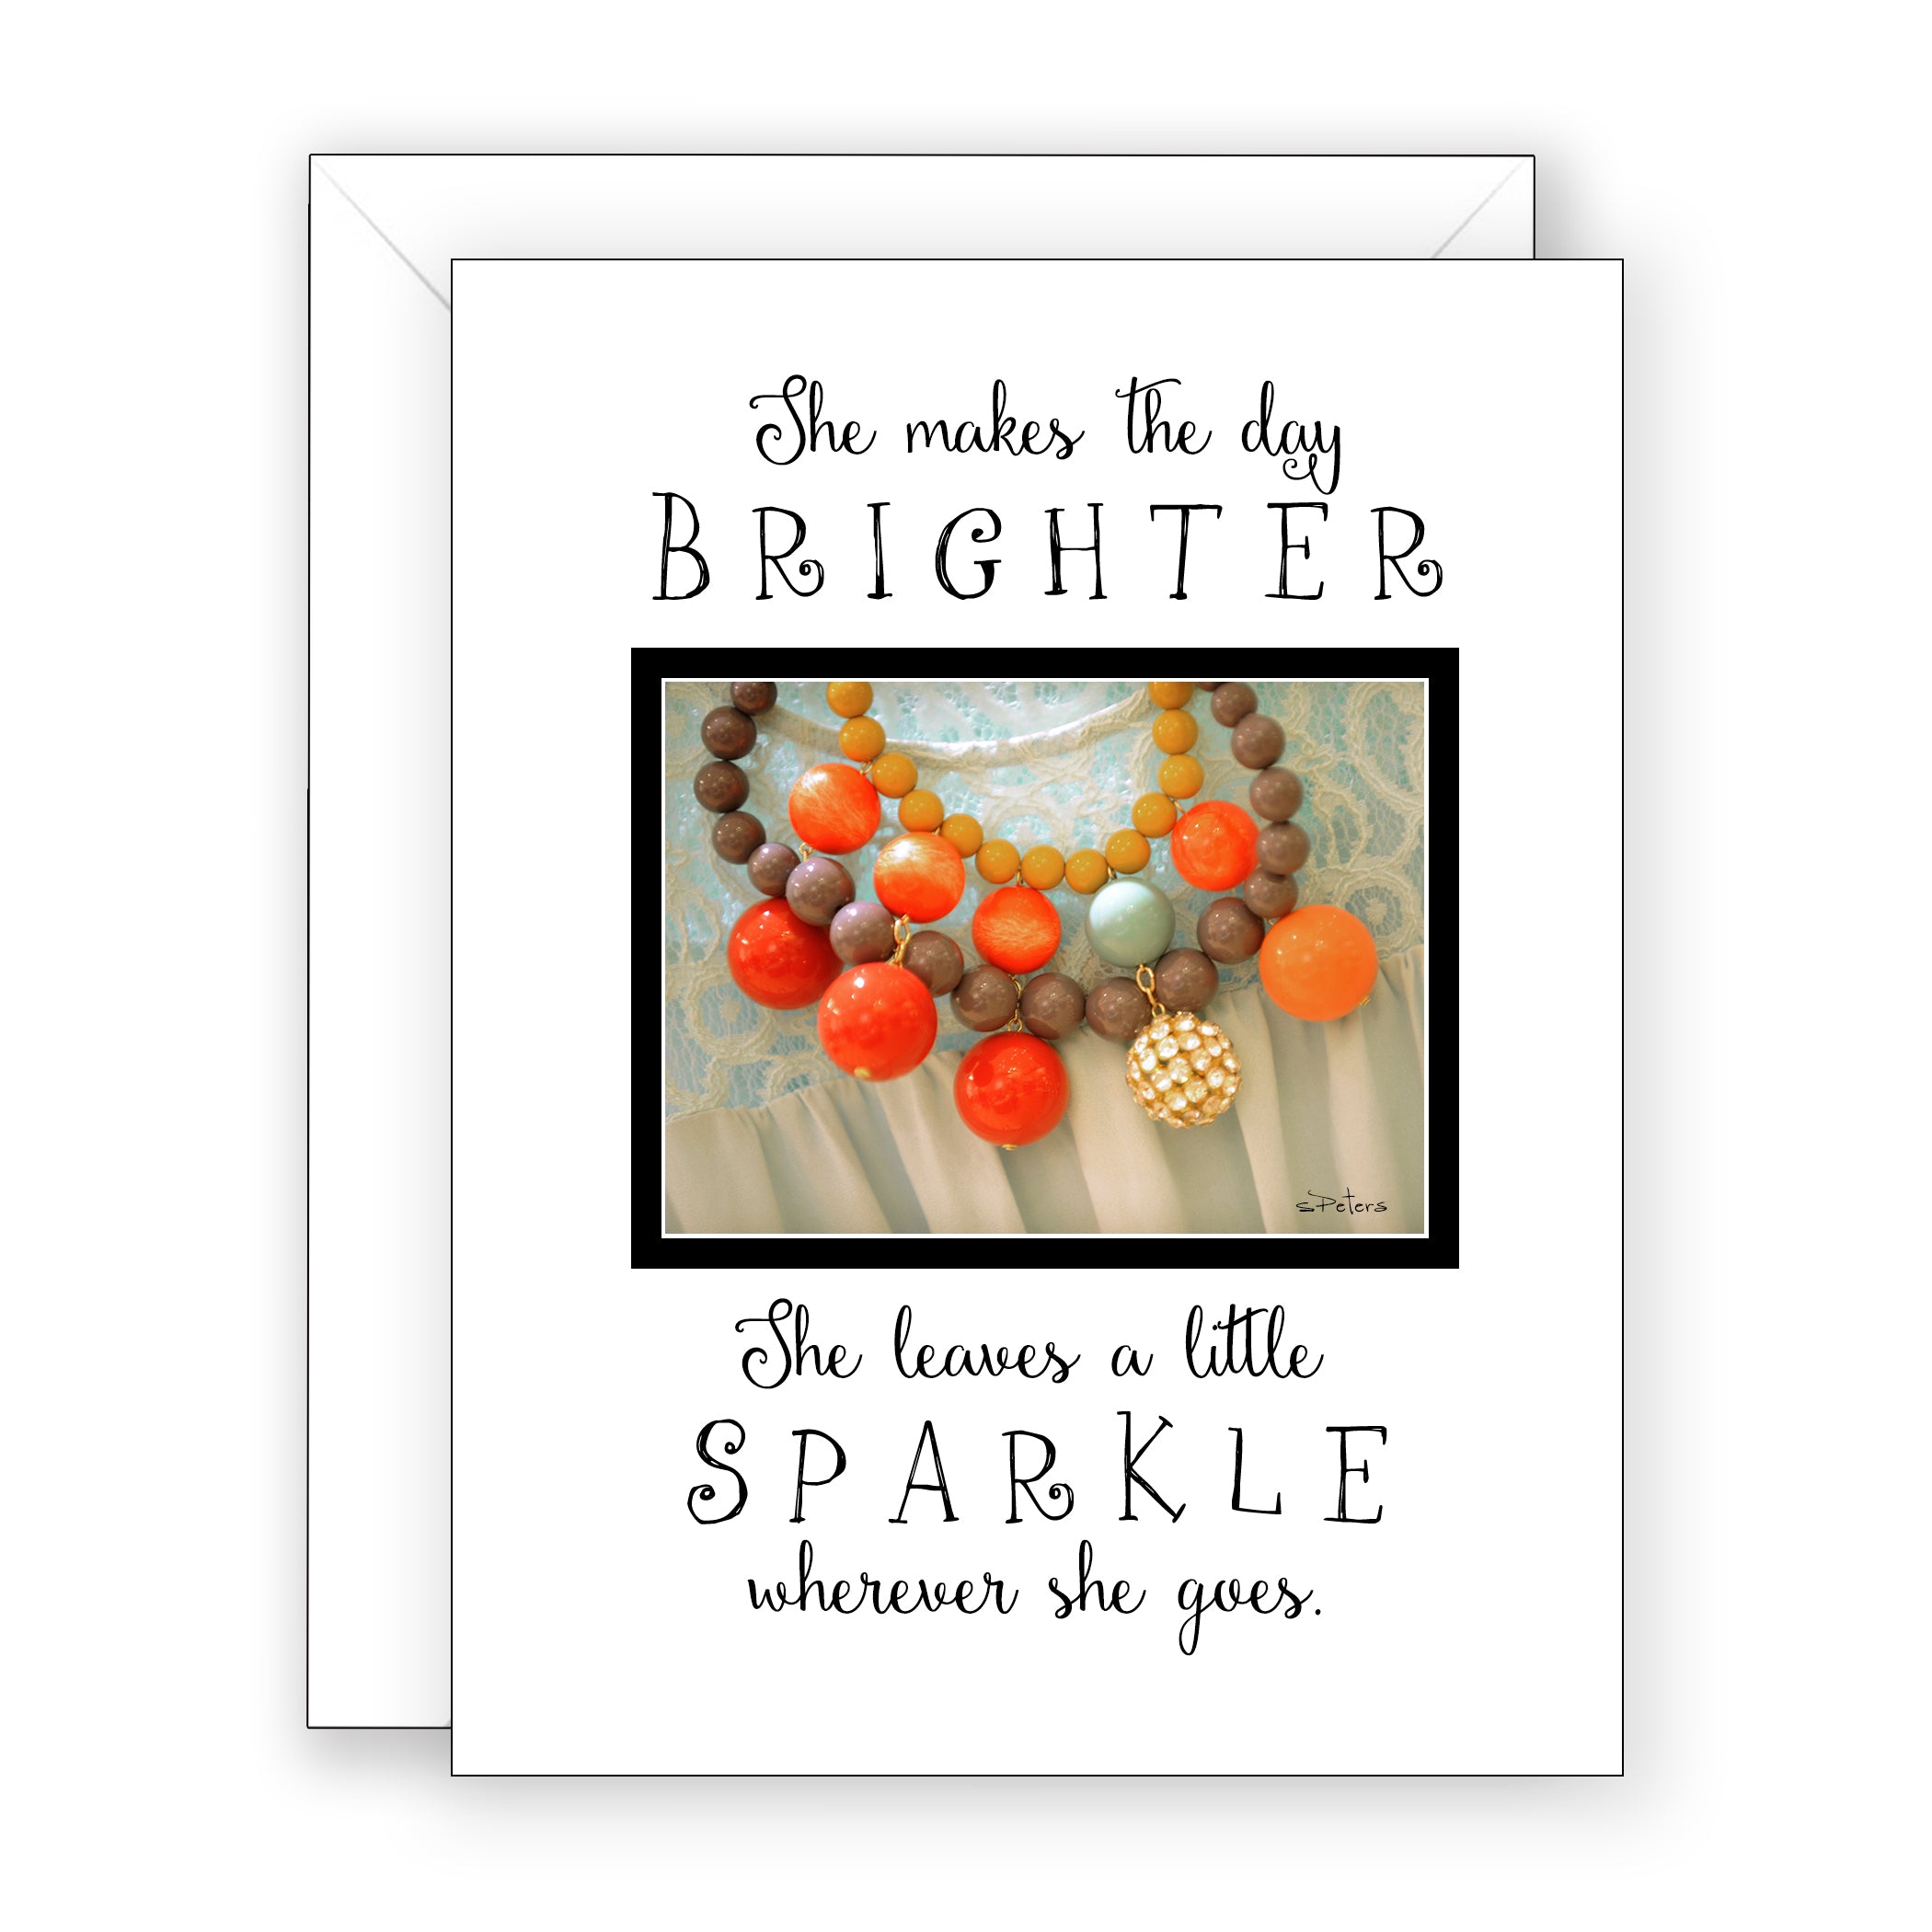 Sparkle - Encouragement Card (Blank)